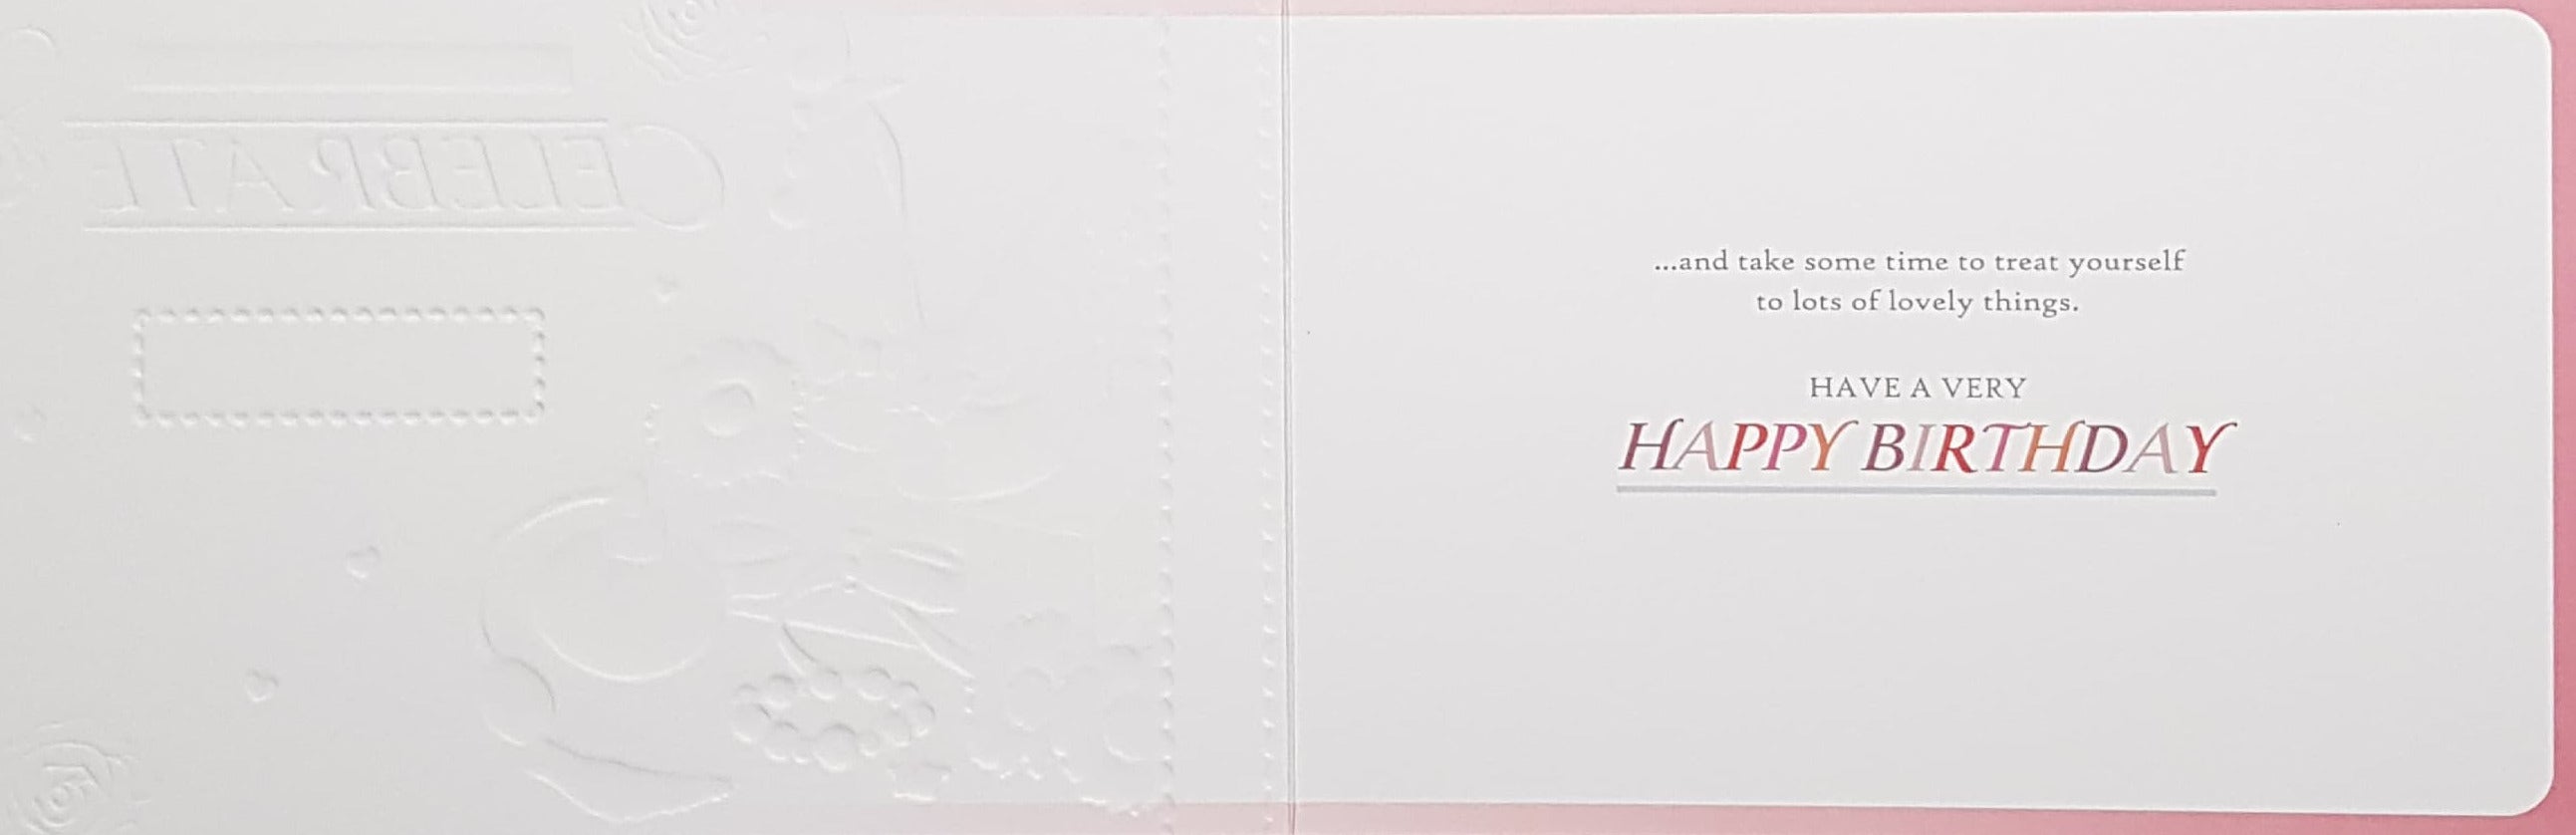 Birthday Card - Pink High Heels & Red Flowers